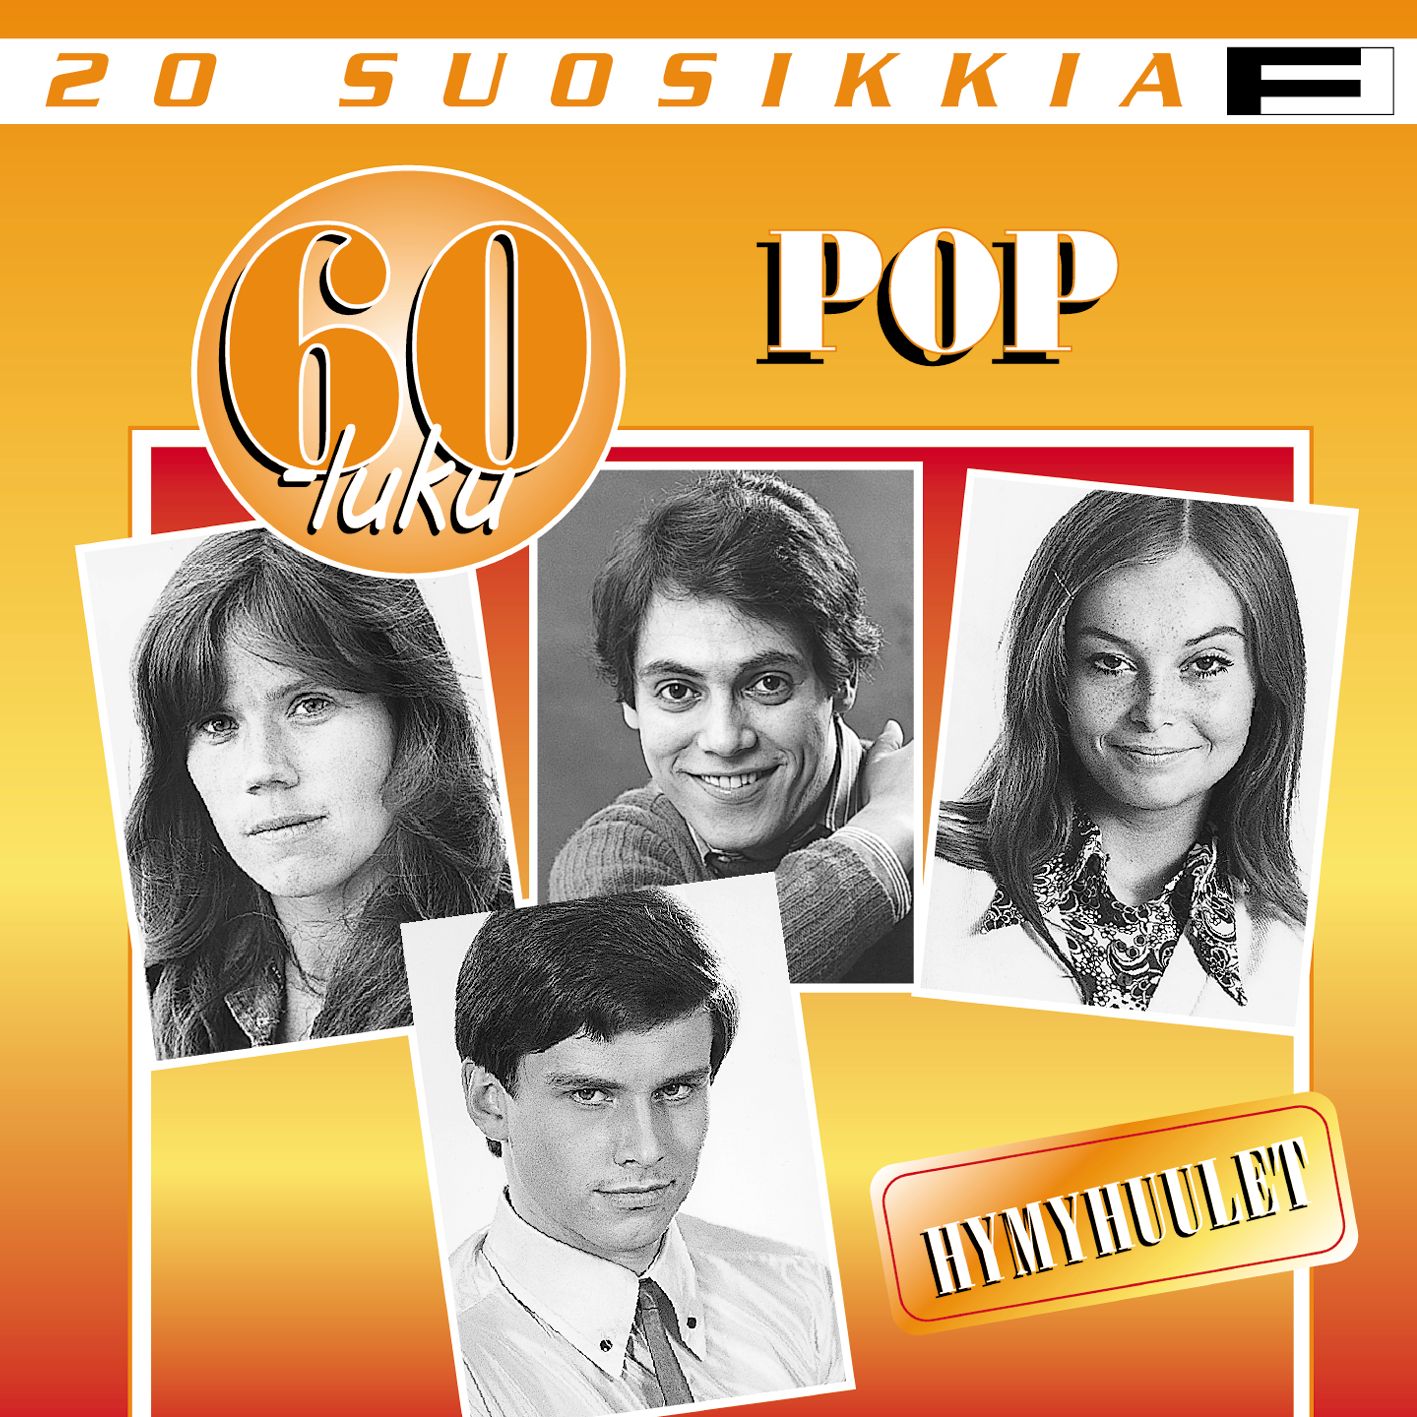 20 Suosikkia / 60-luku / Pop / Hymyhuulet